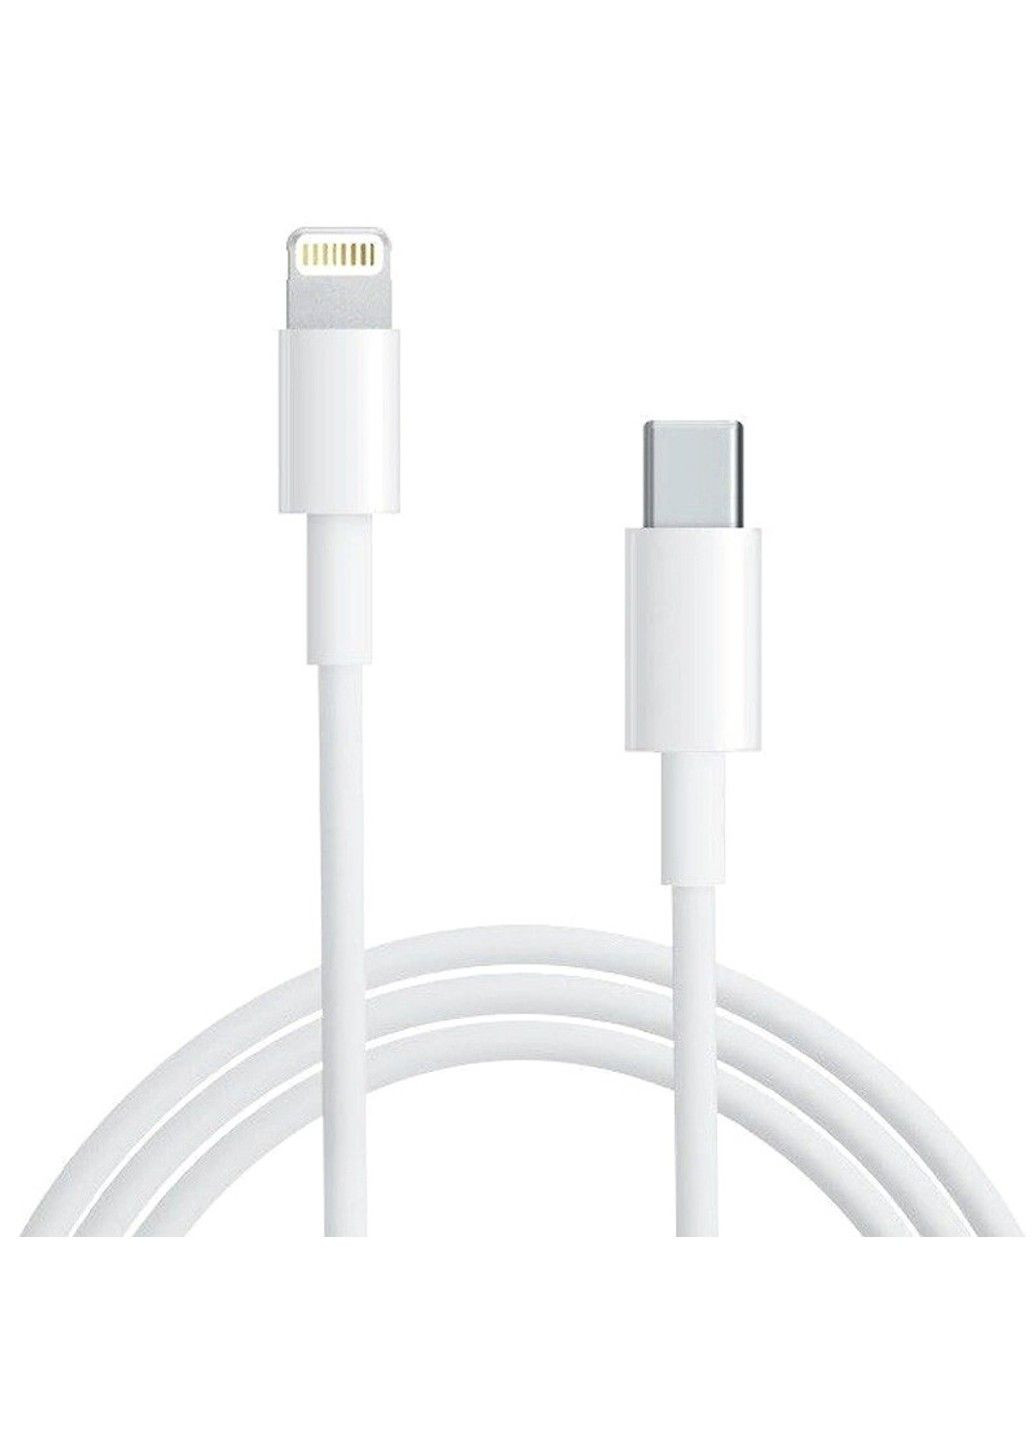 Дата кабель Foxconn для Apple iPhone USB-C to Lightning (AAA grade) (2m) (box, no logo) Brand_A_Class (291880639)